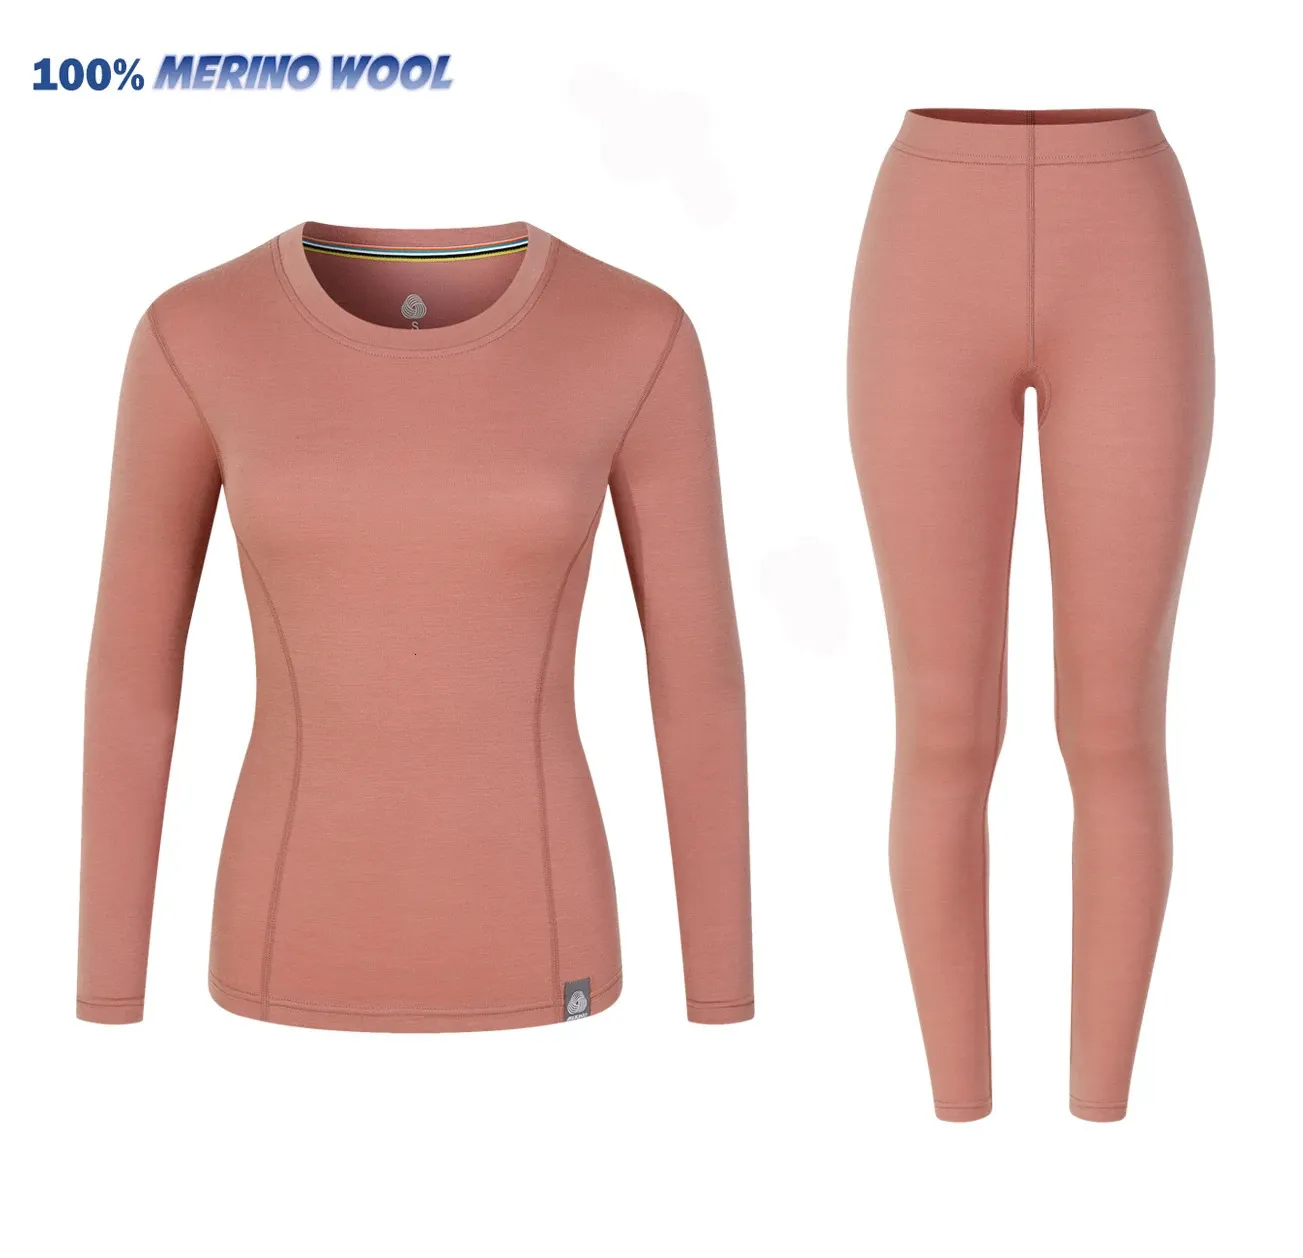 Womens Merino Wool Thermal Base Layer Set Warm, Anti Odor